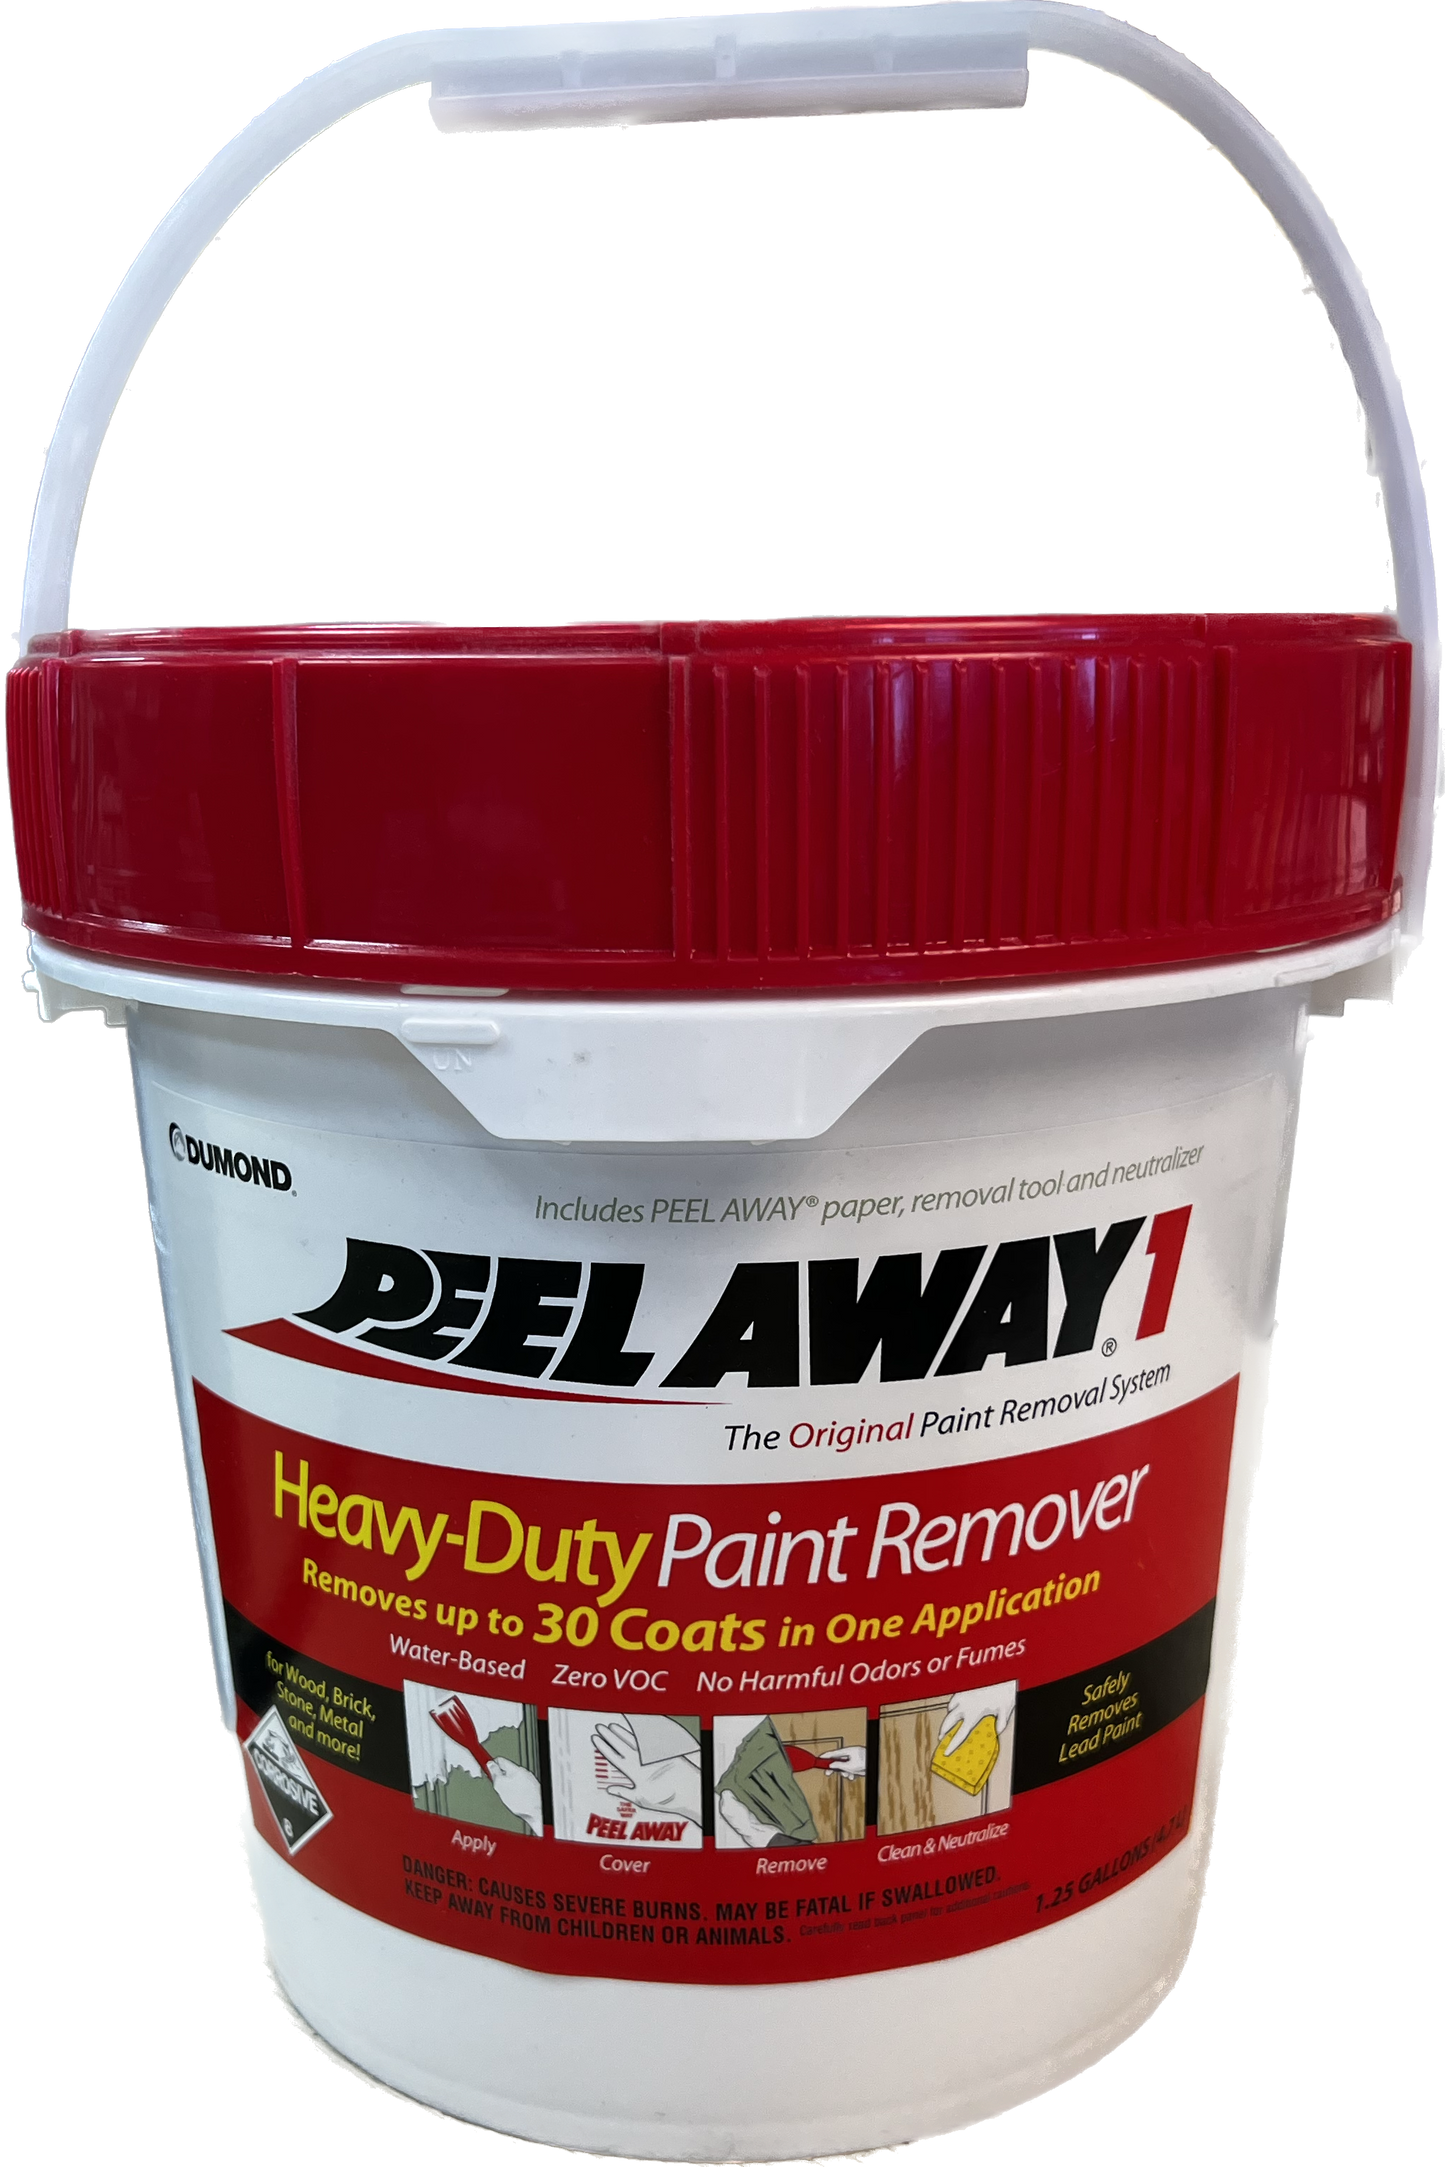 Dumond Peel Away1 Heavy Duty Paint Remover